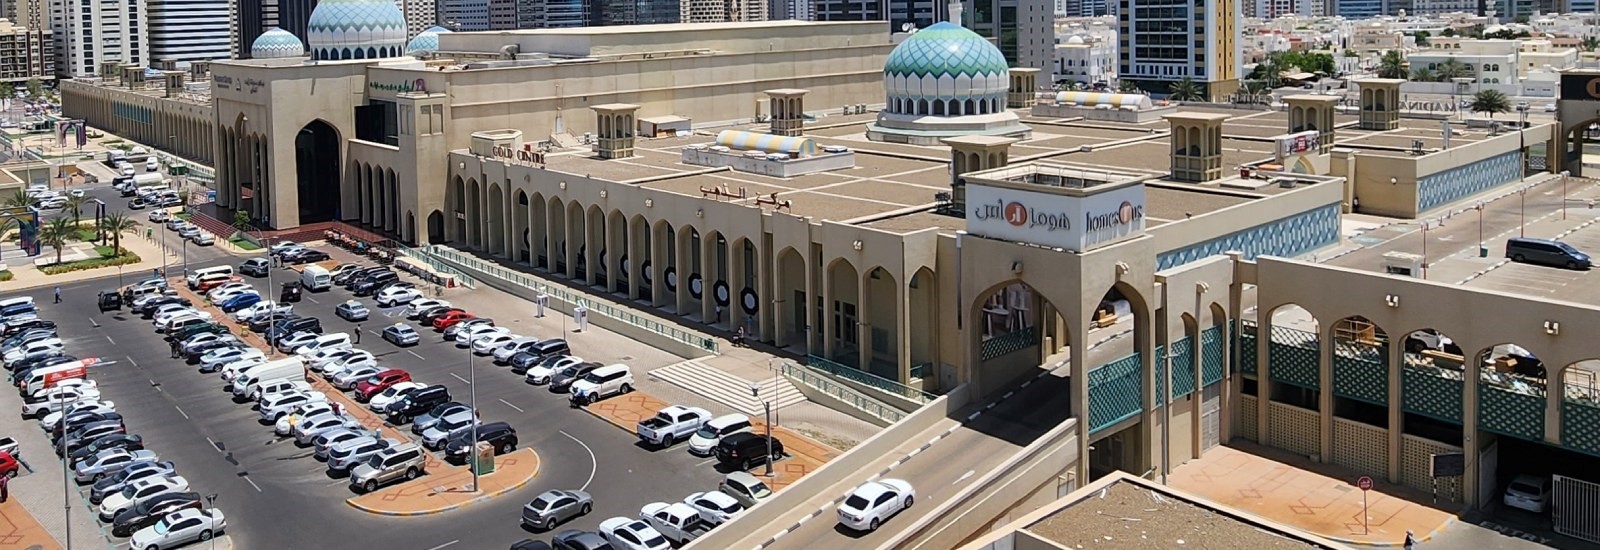 Madinat Zayed Shopping Centre